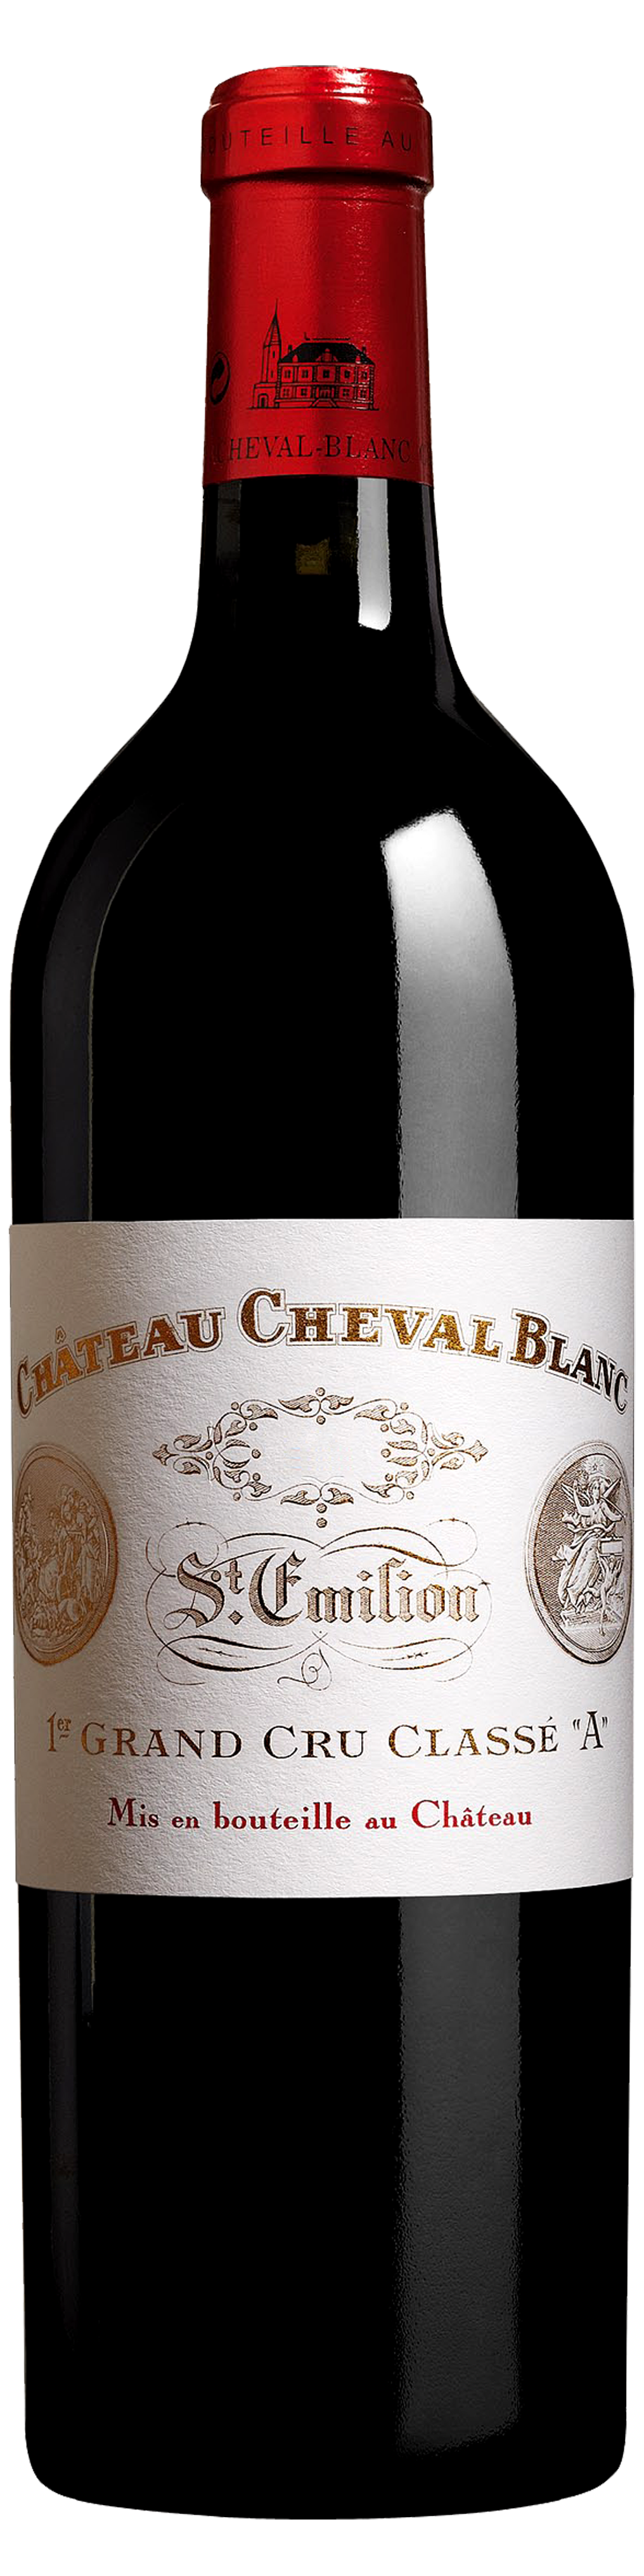 Chateau Cheval Blanc, 2006